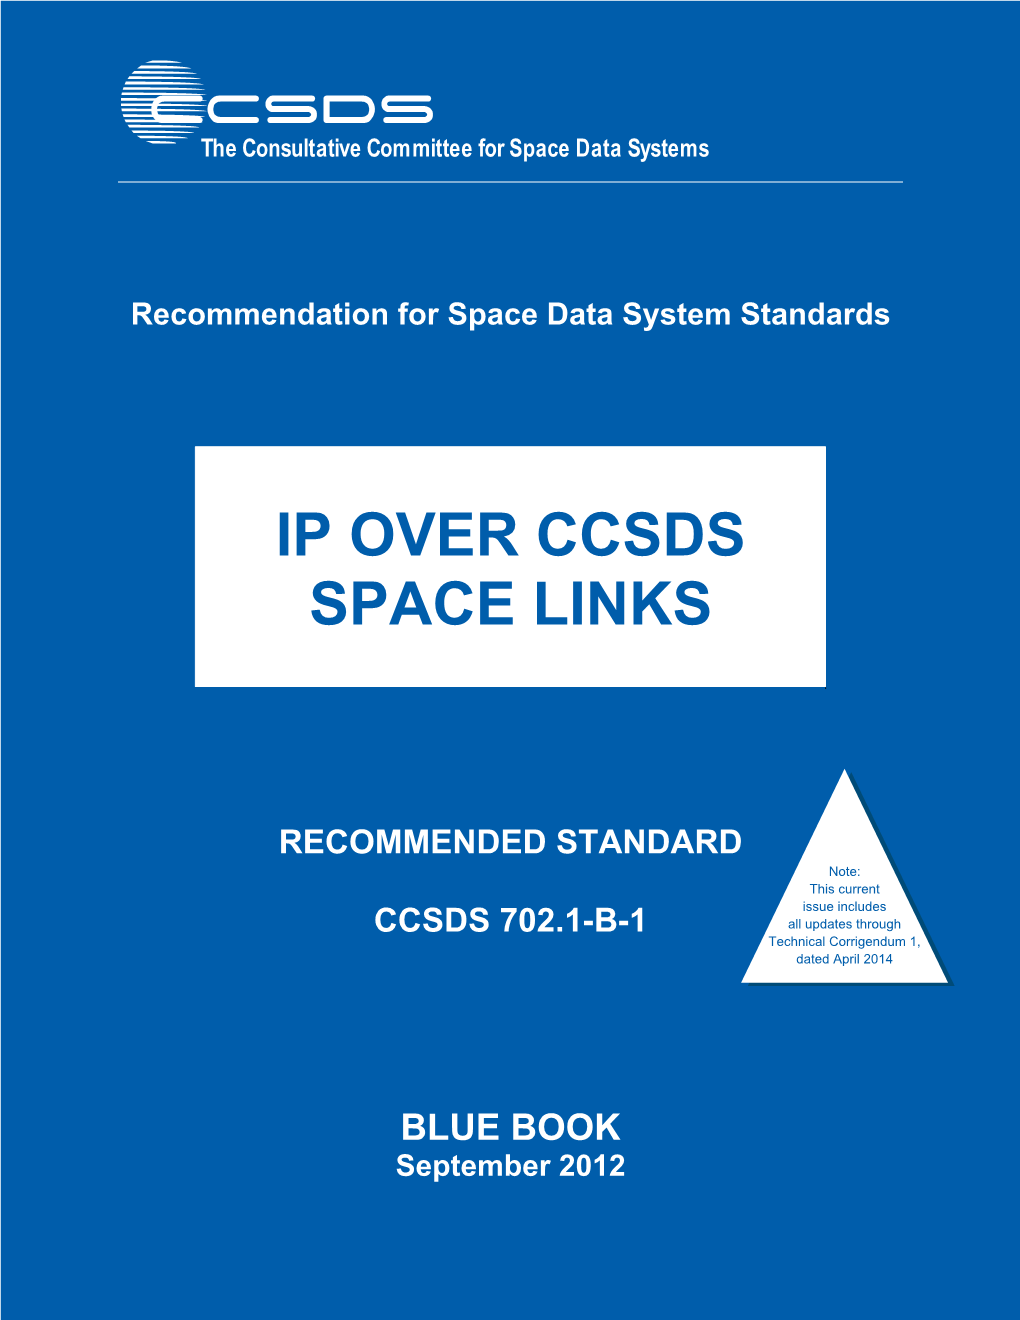 CCSDS 702.1-B-1 Technical Corrigendum 1, Dated April 2014